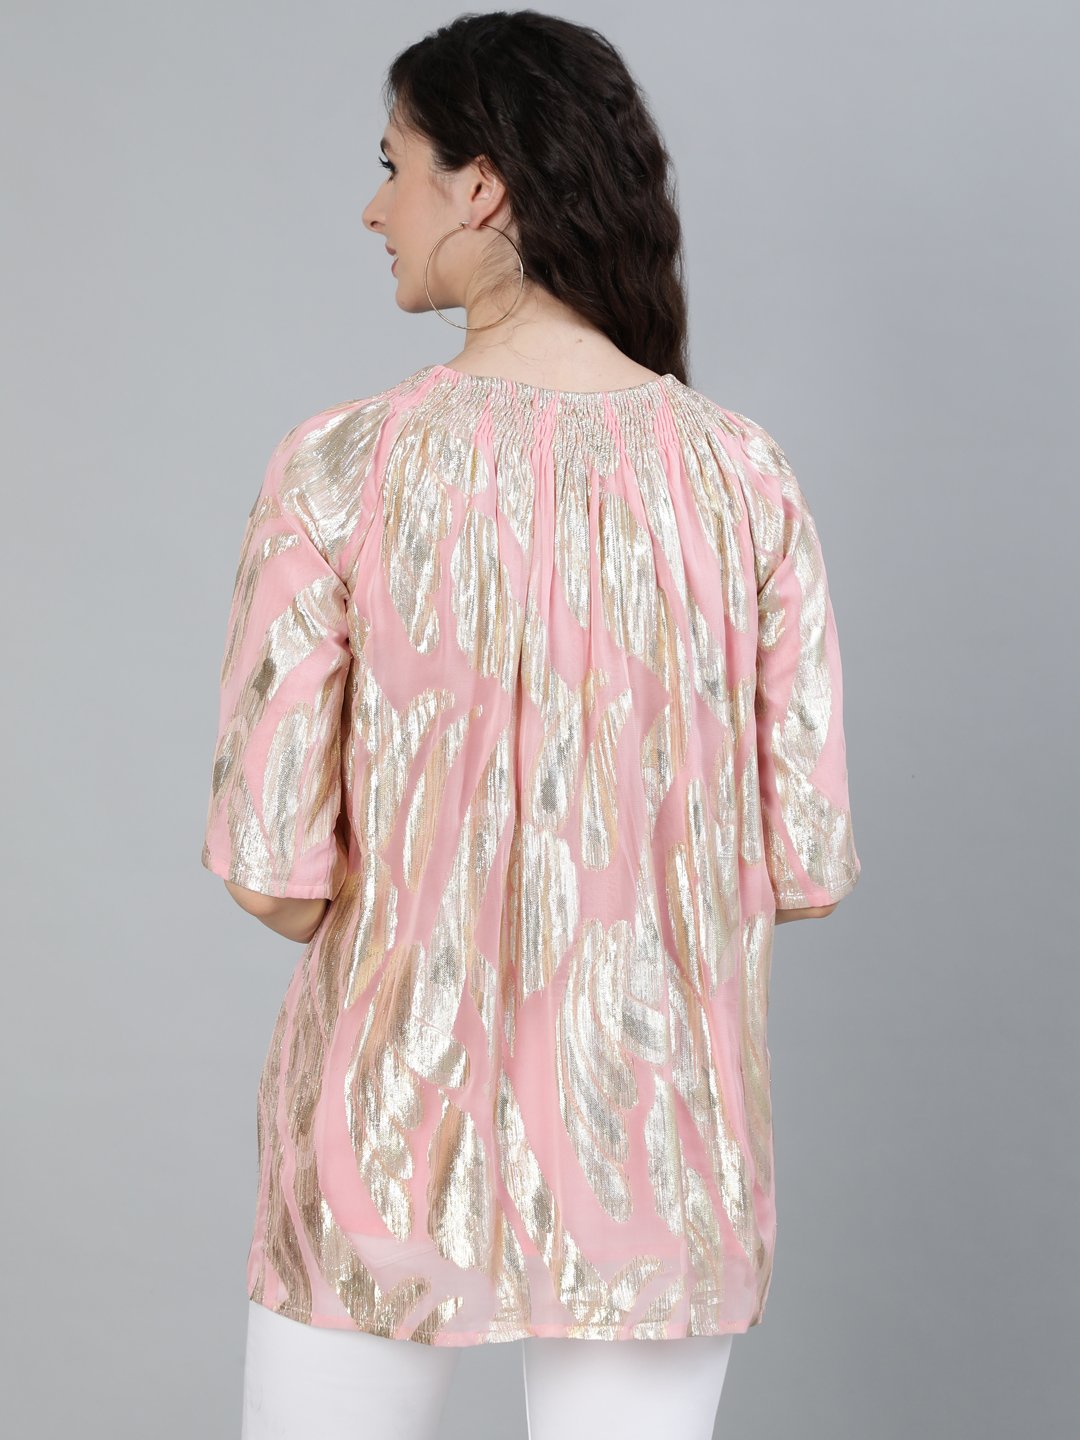 Ishin Women's Pink Shimmer Weave A-Line Top